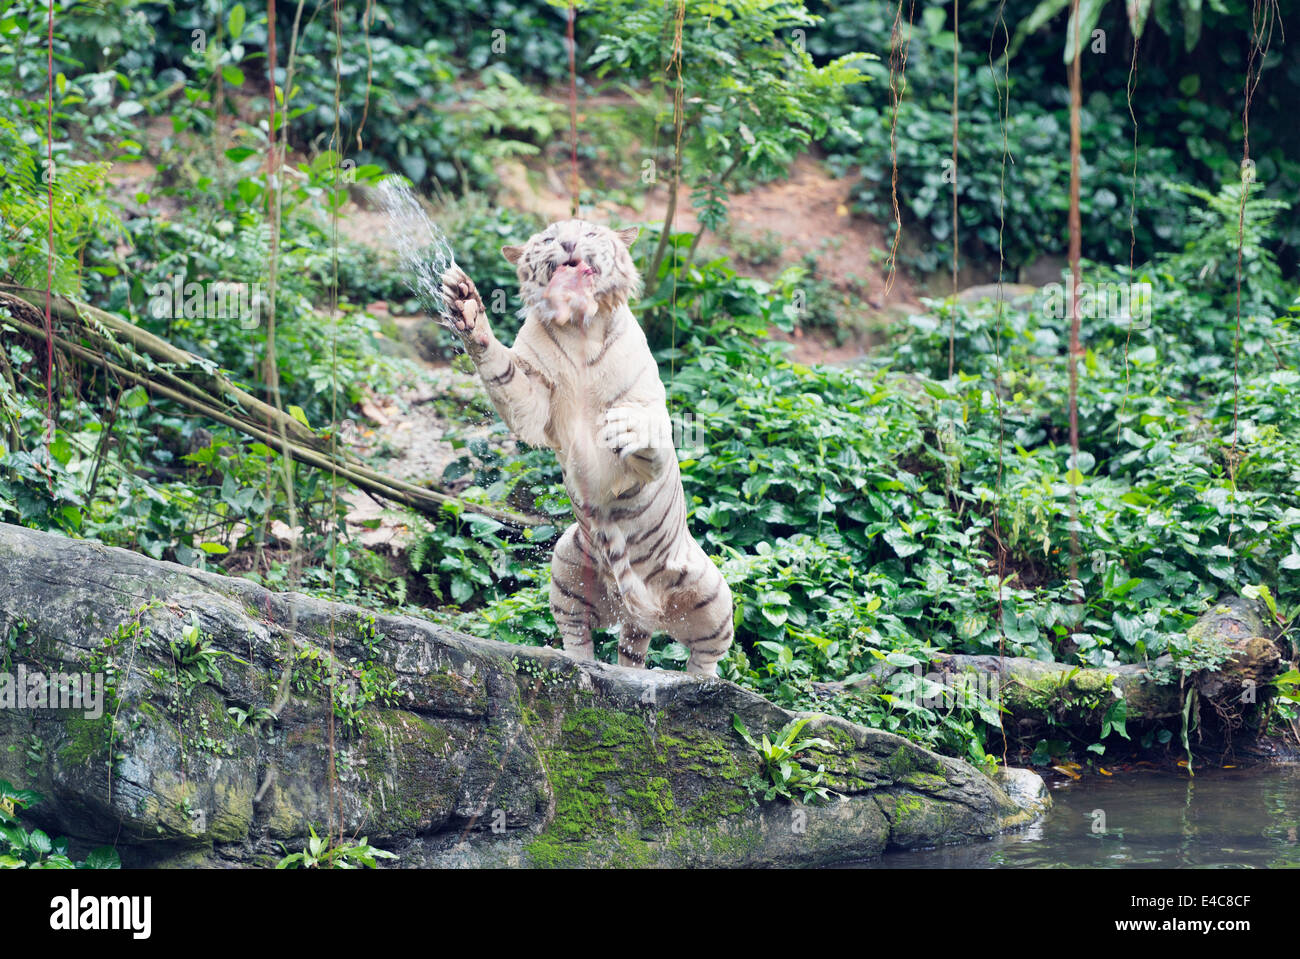 Il Sud Est asiatico, Singapore, Singapore Zoo, Panthera tigris tigris tigre bianca Foto Stock